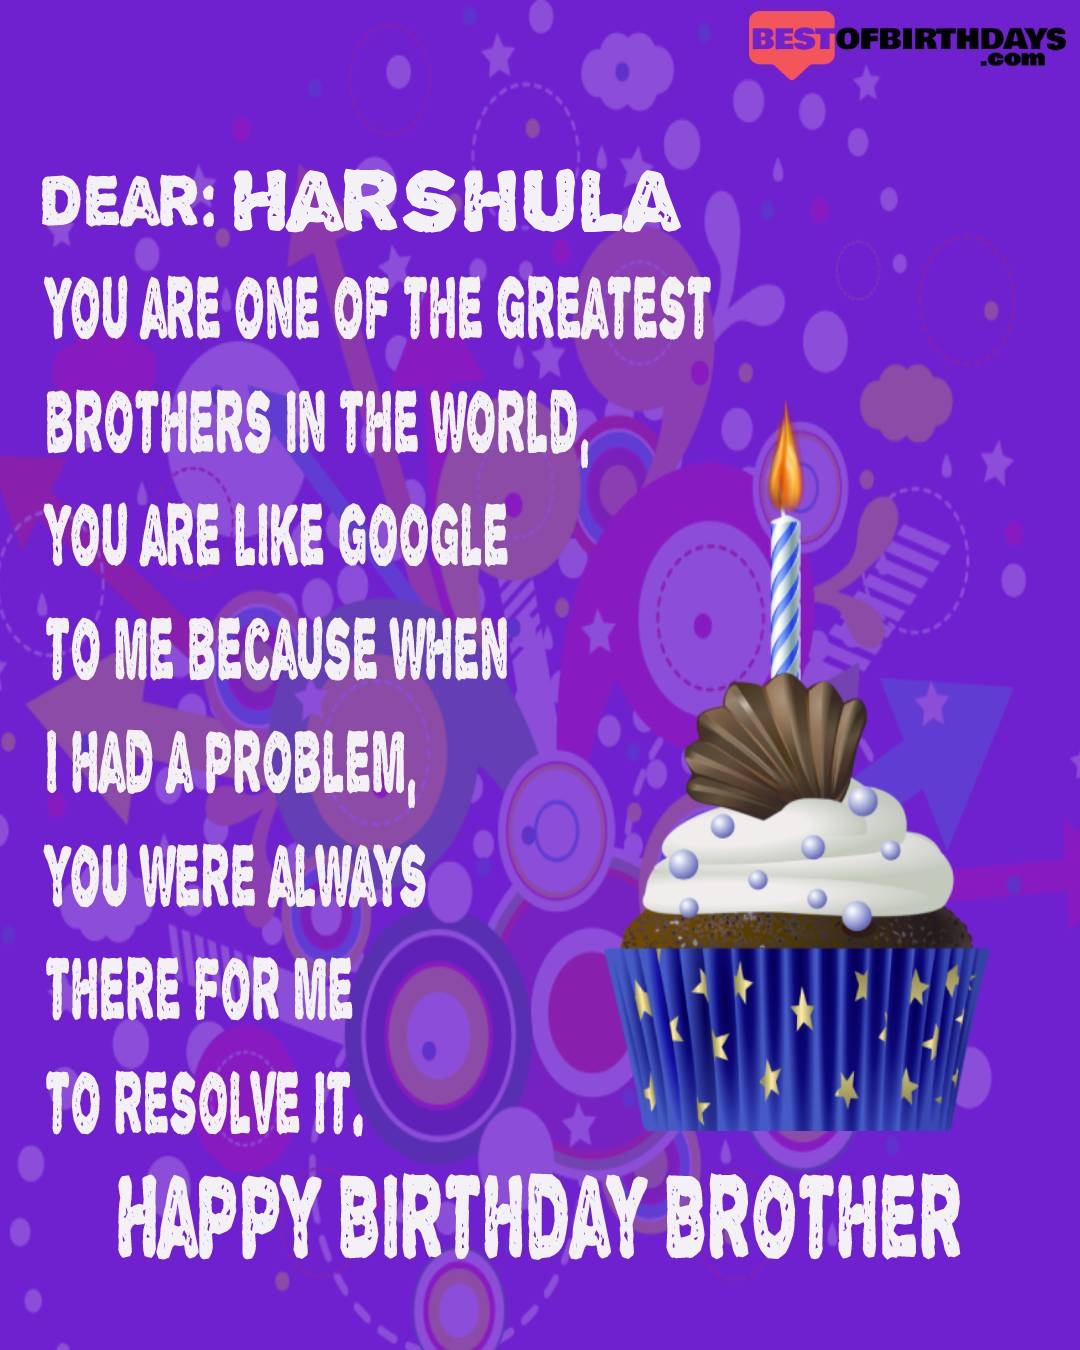 Happy birthday harshula bhai brother bro